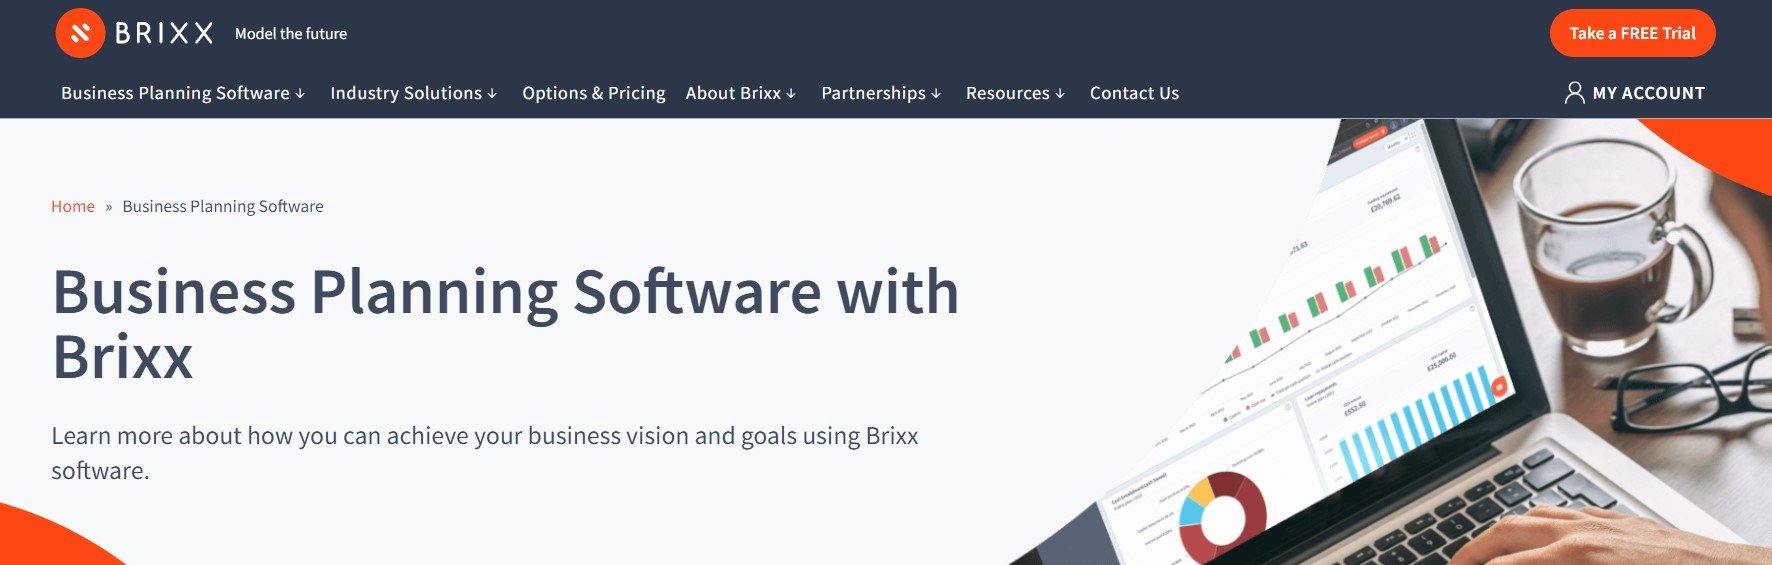 Brixx ビジネス プランニング ソフトウェア